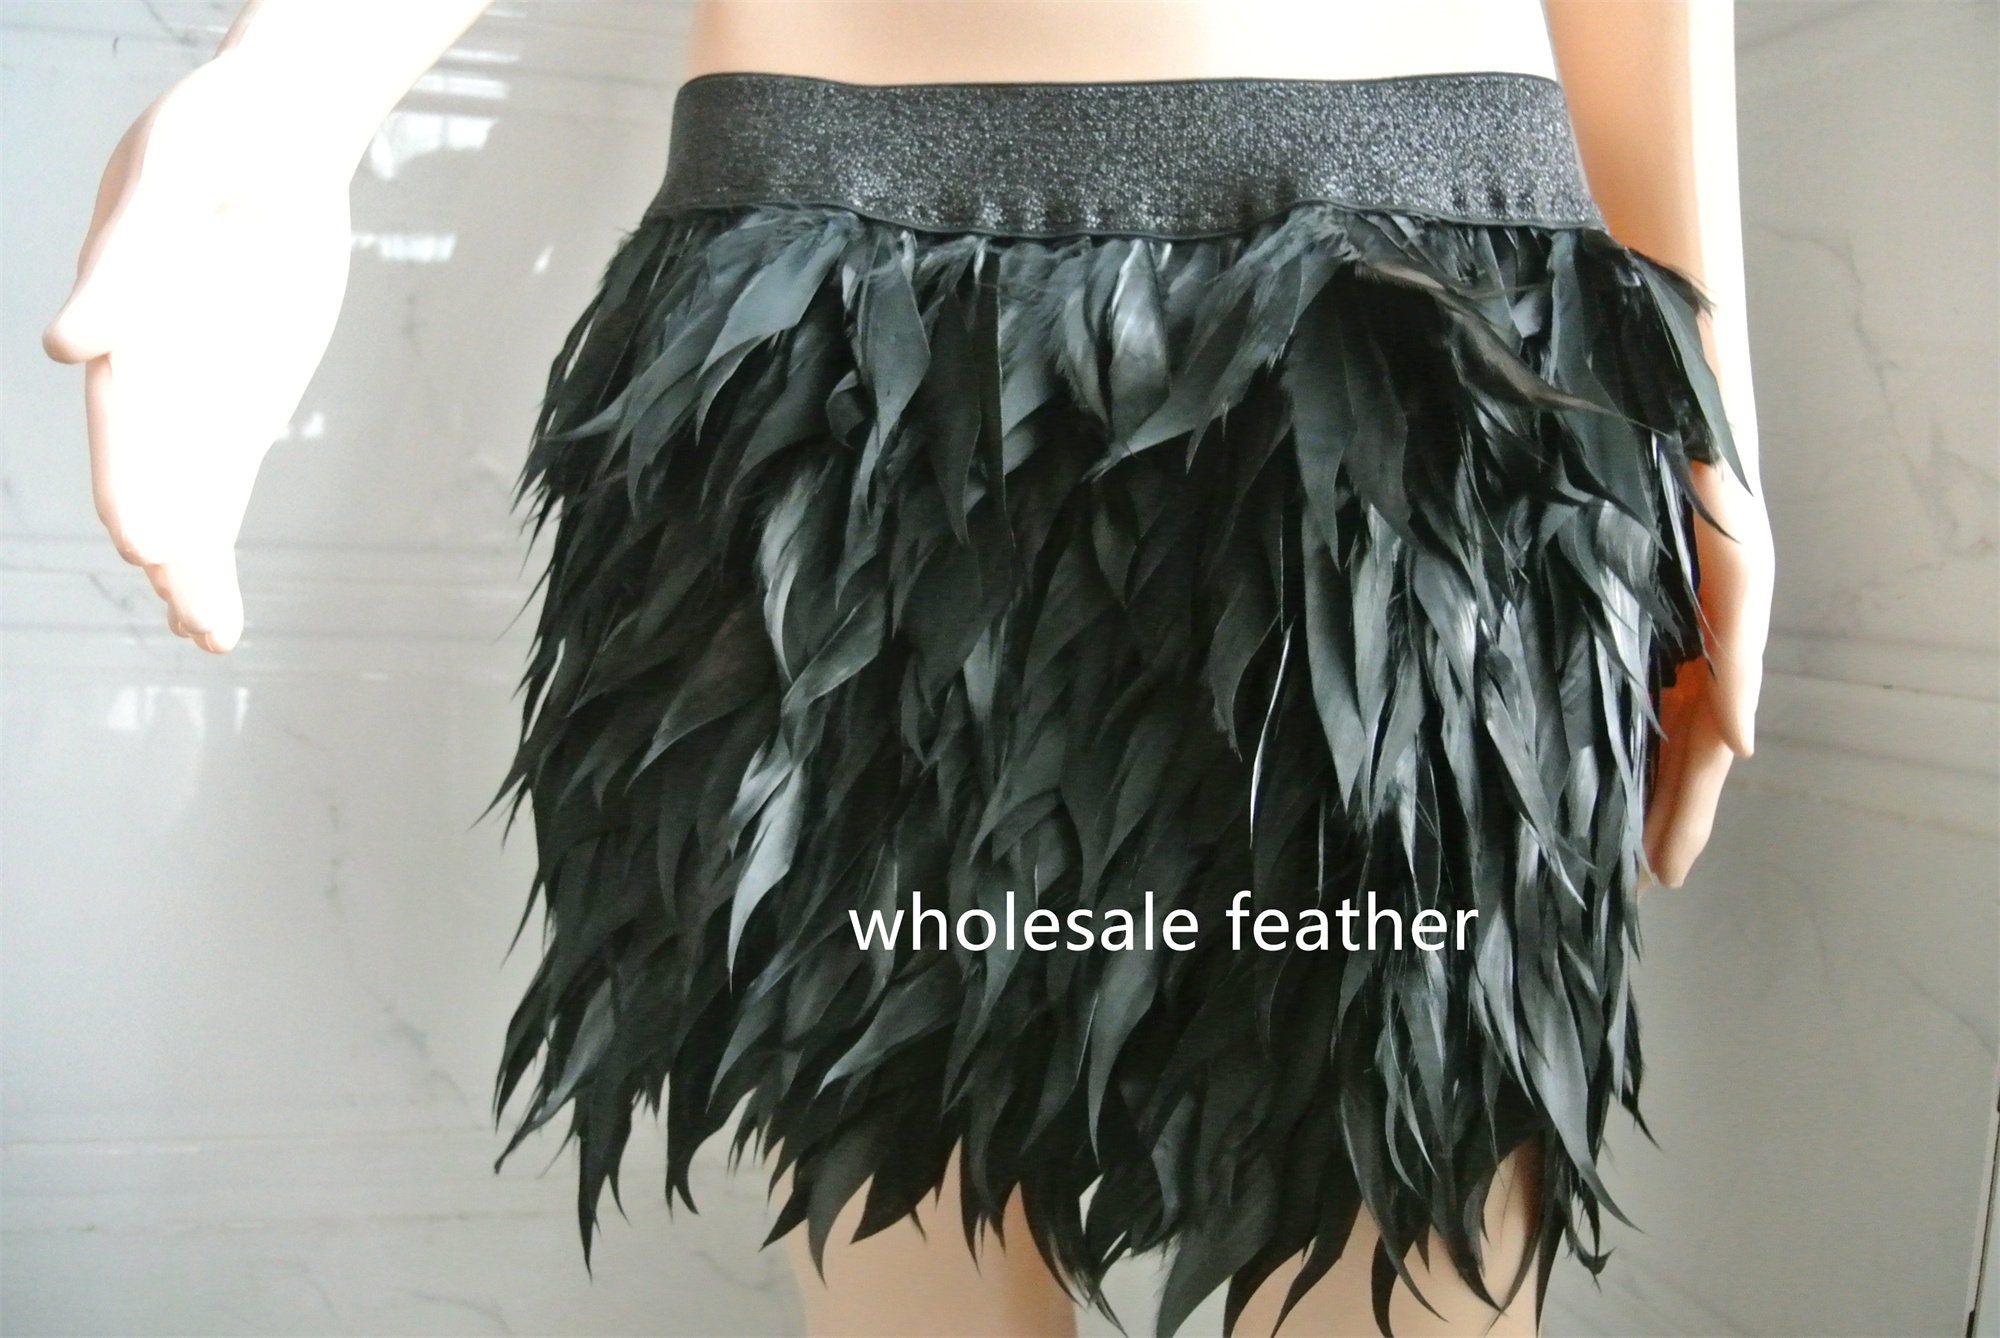 Feather Skirt - Mini Skirt - High-Waisted Skirt - $95.00 - Lulus